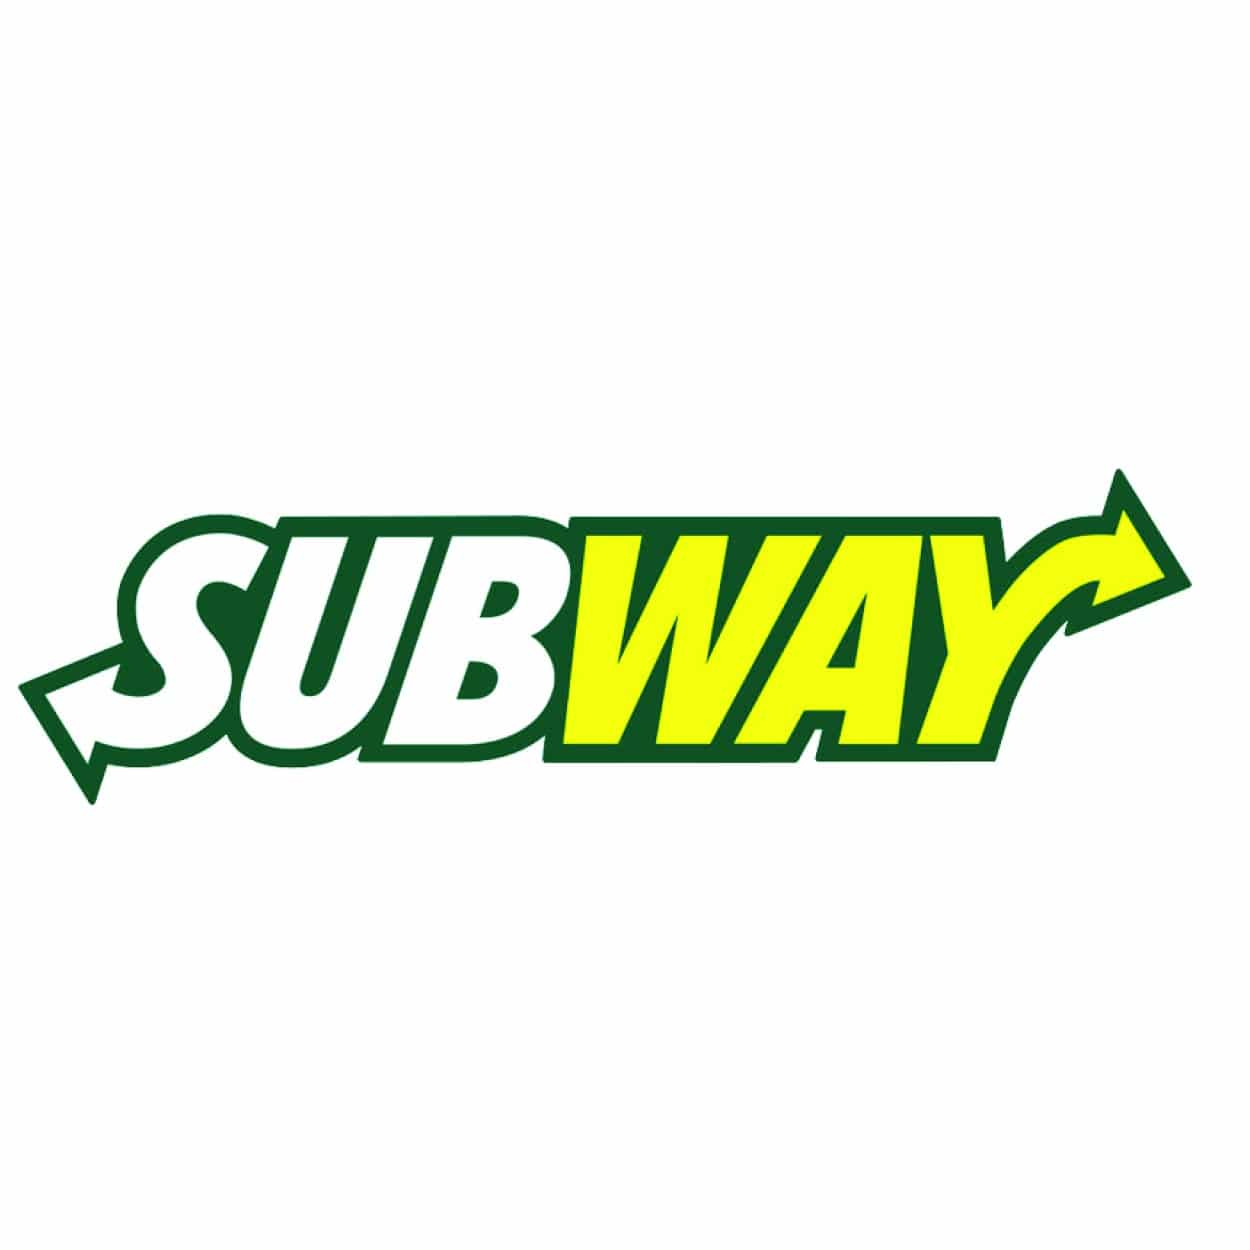 logo subway